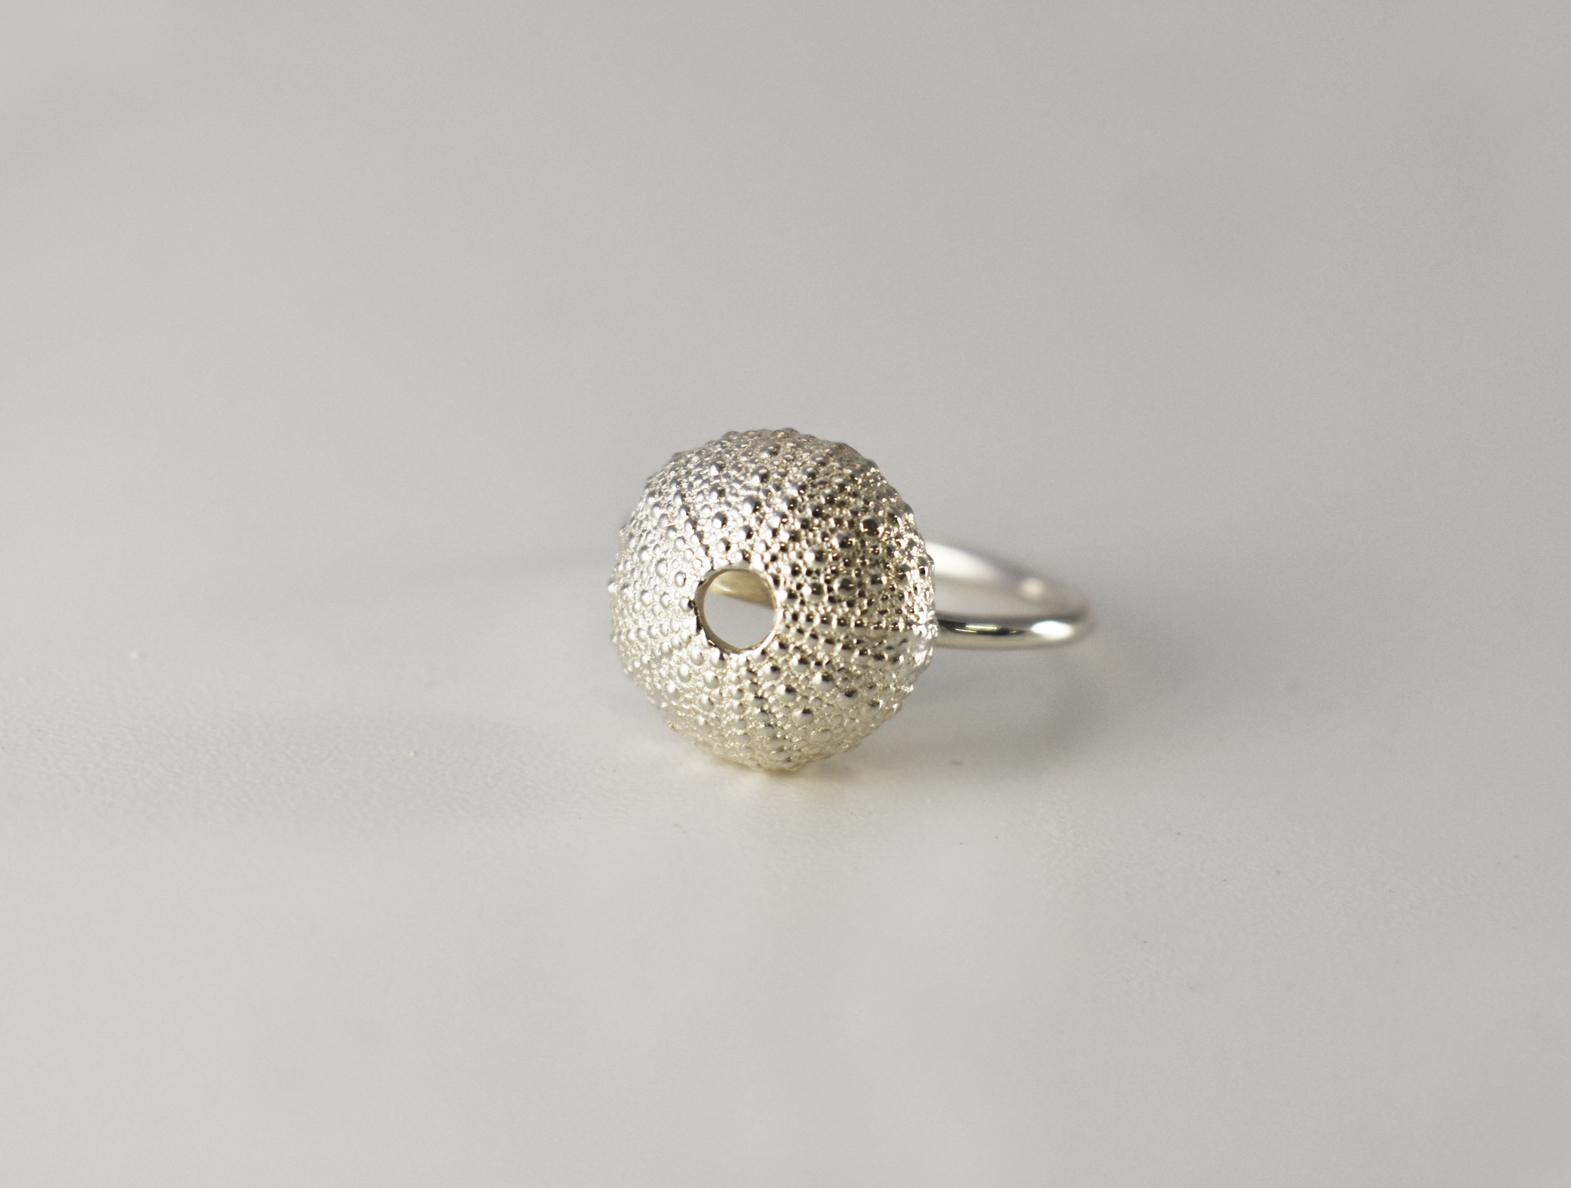 Silver Sea Urchin Ring